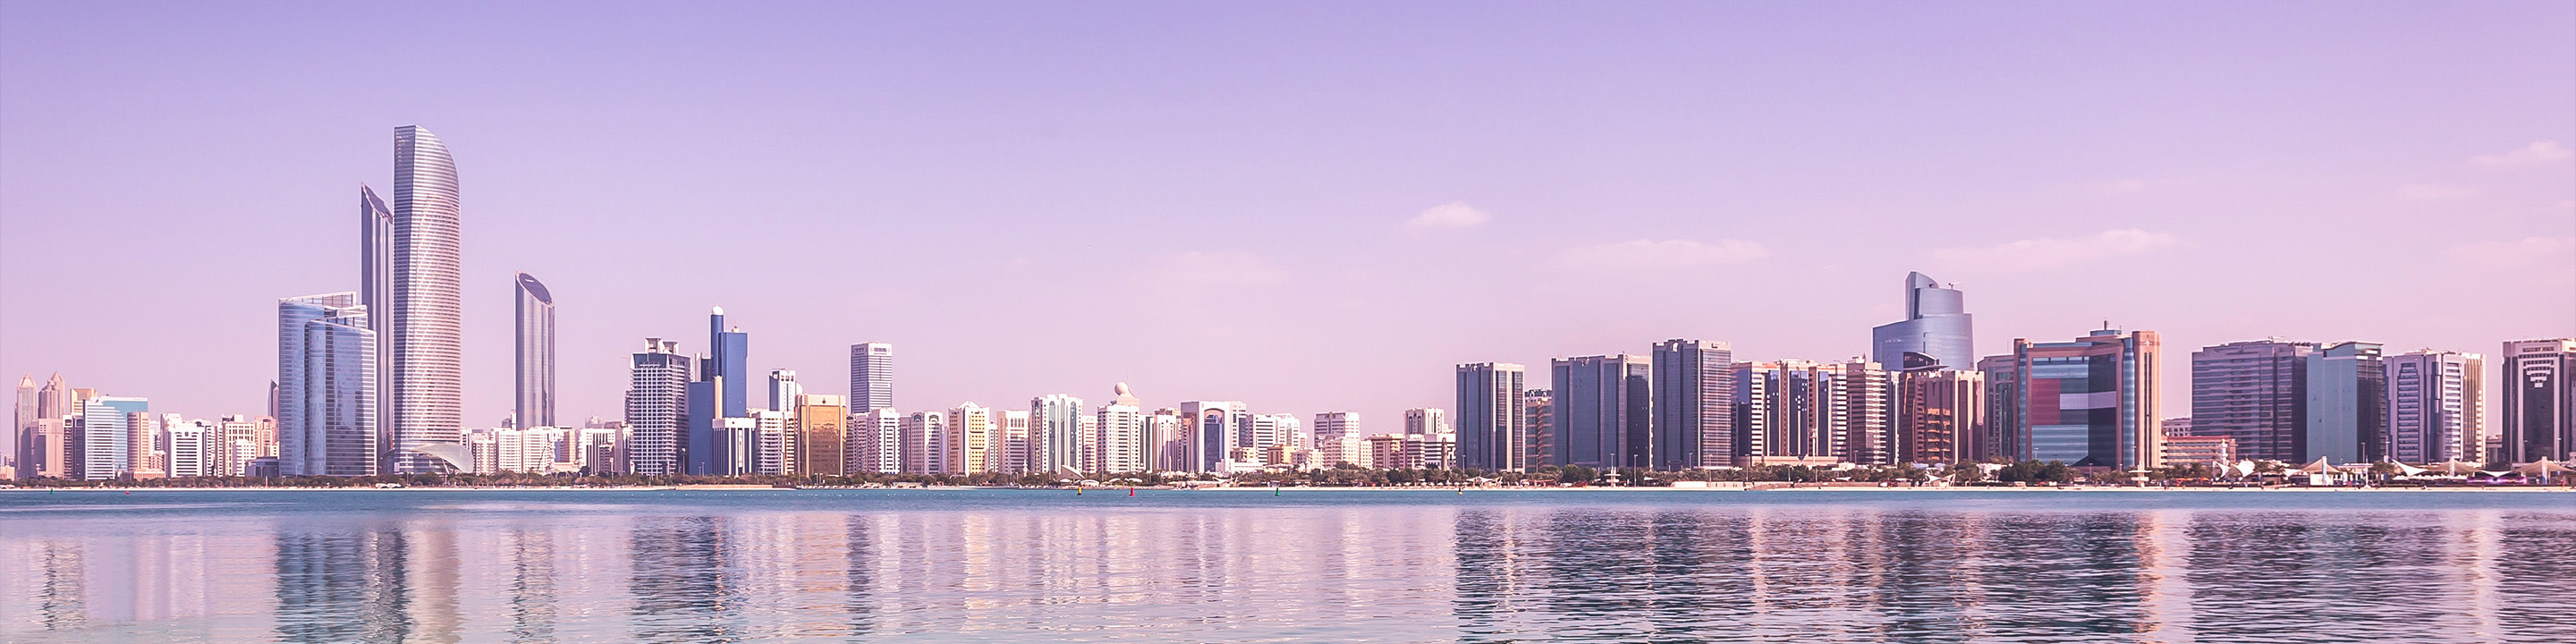 The sprawling skyline of Dubai against the backdrop of the purple light of dusk or dawn.